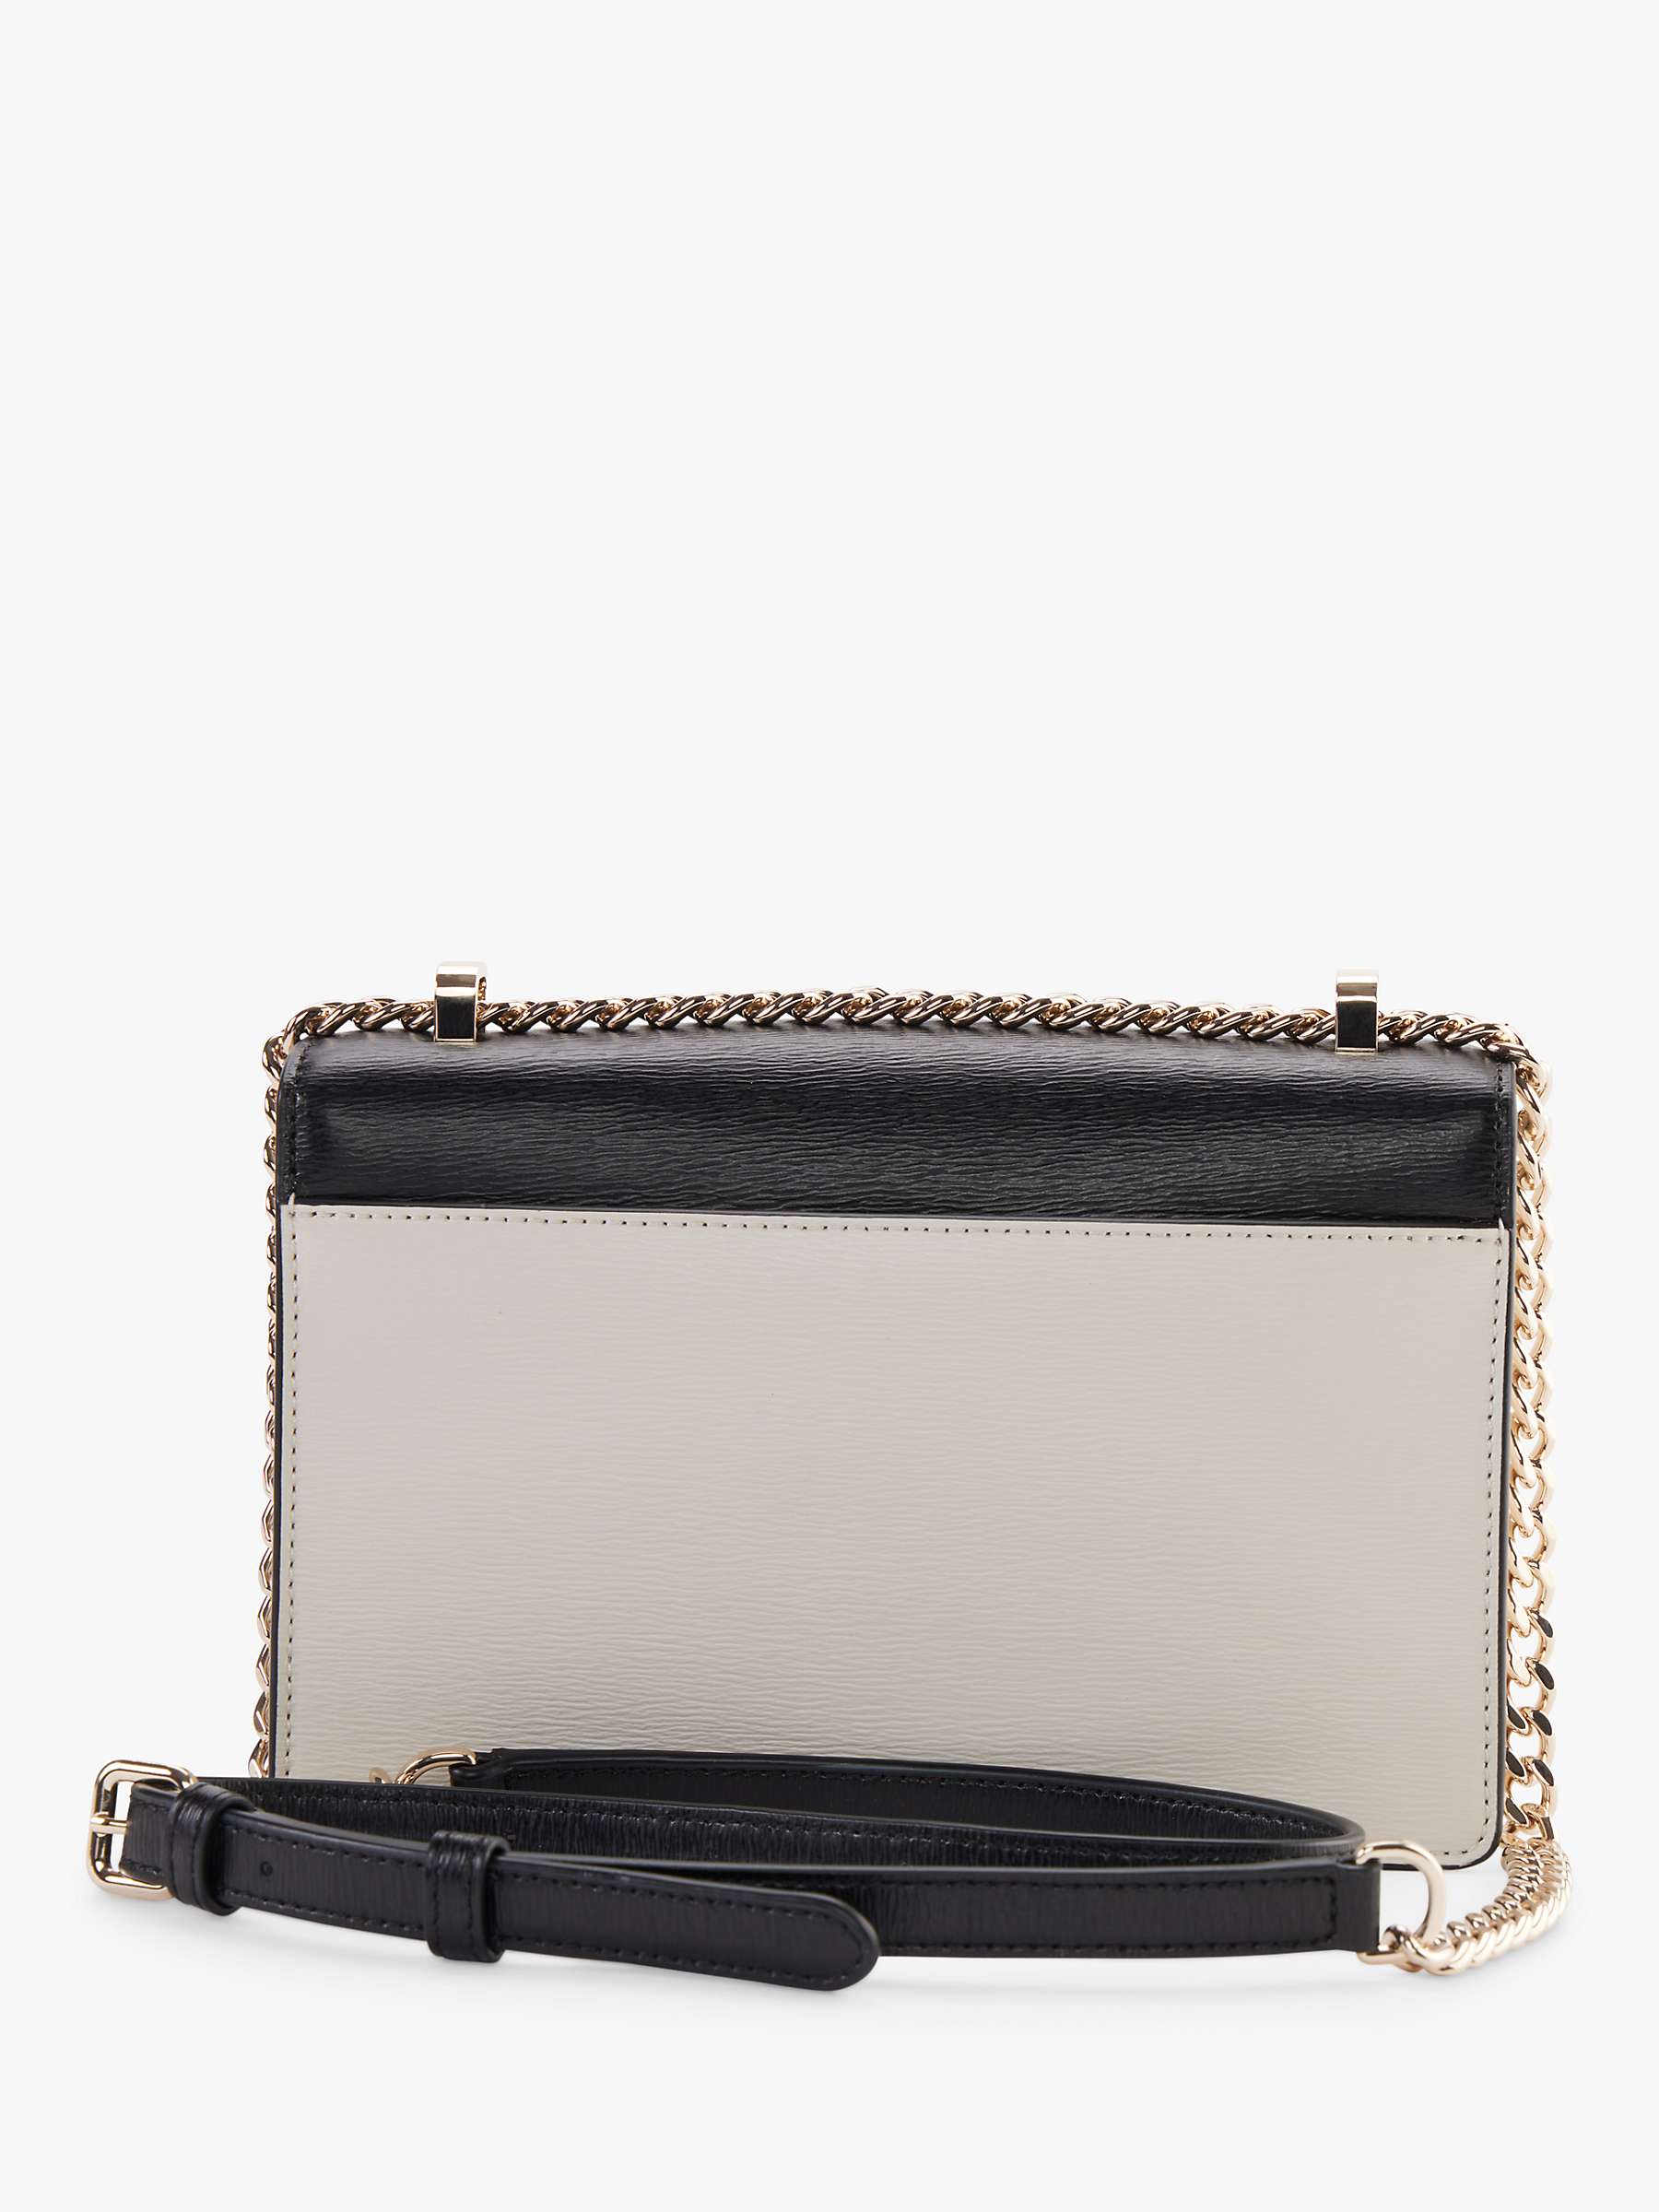 Buy DKNY Elissa Pebble Leather Cross Body Bag Online at johnlewis.com